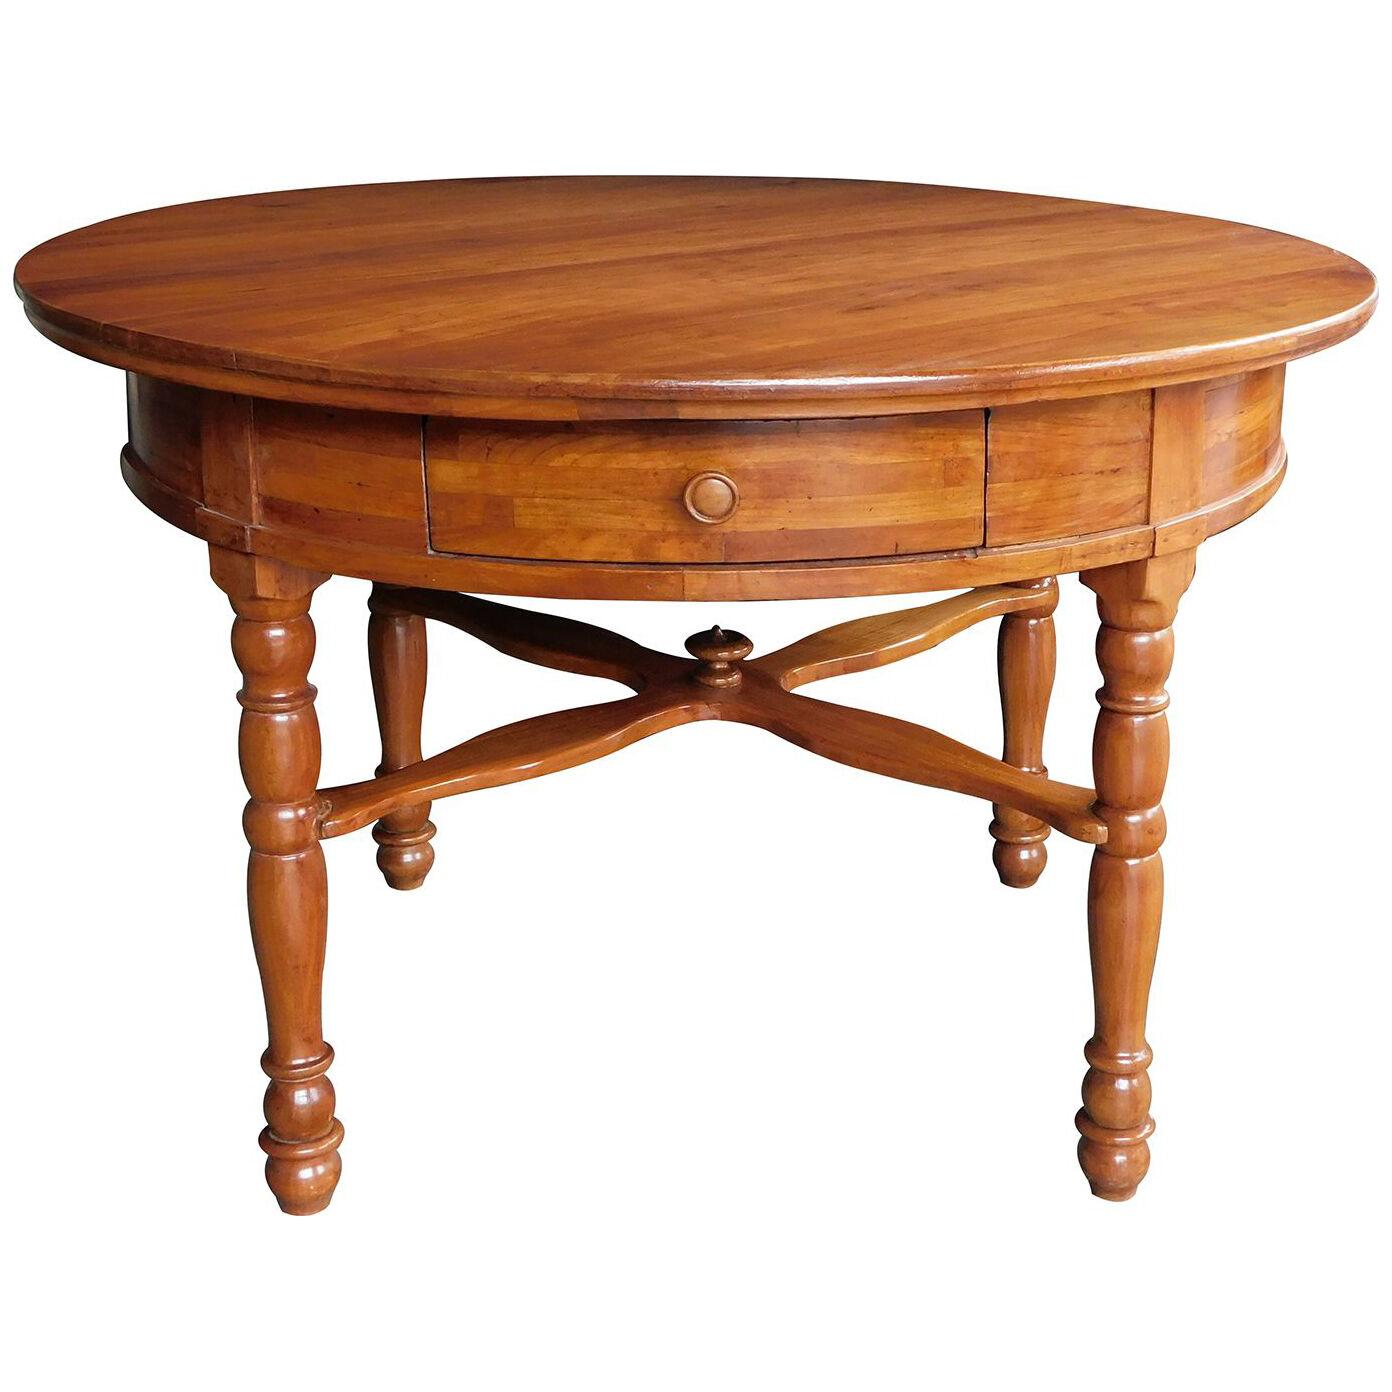 Large Swiss cherrywood single-drawer circular center table